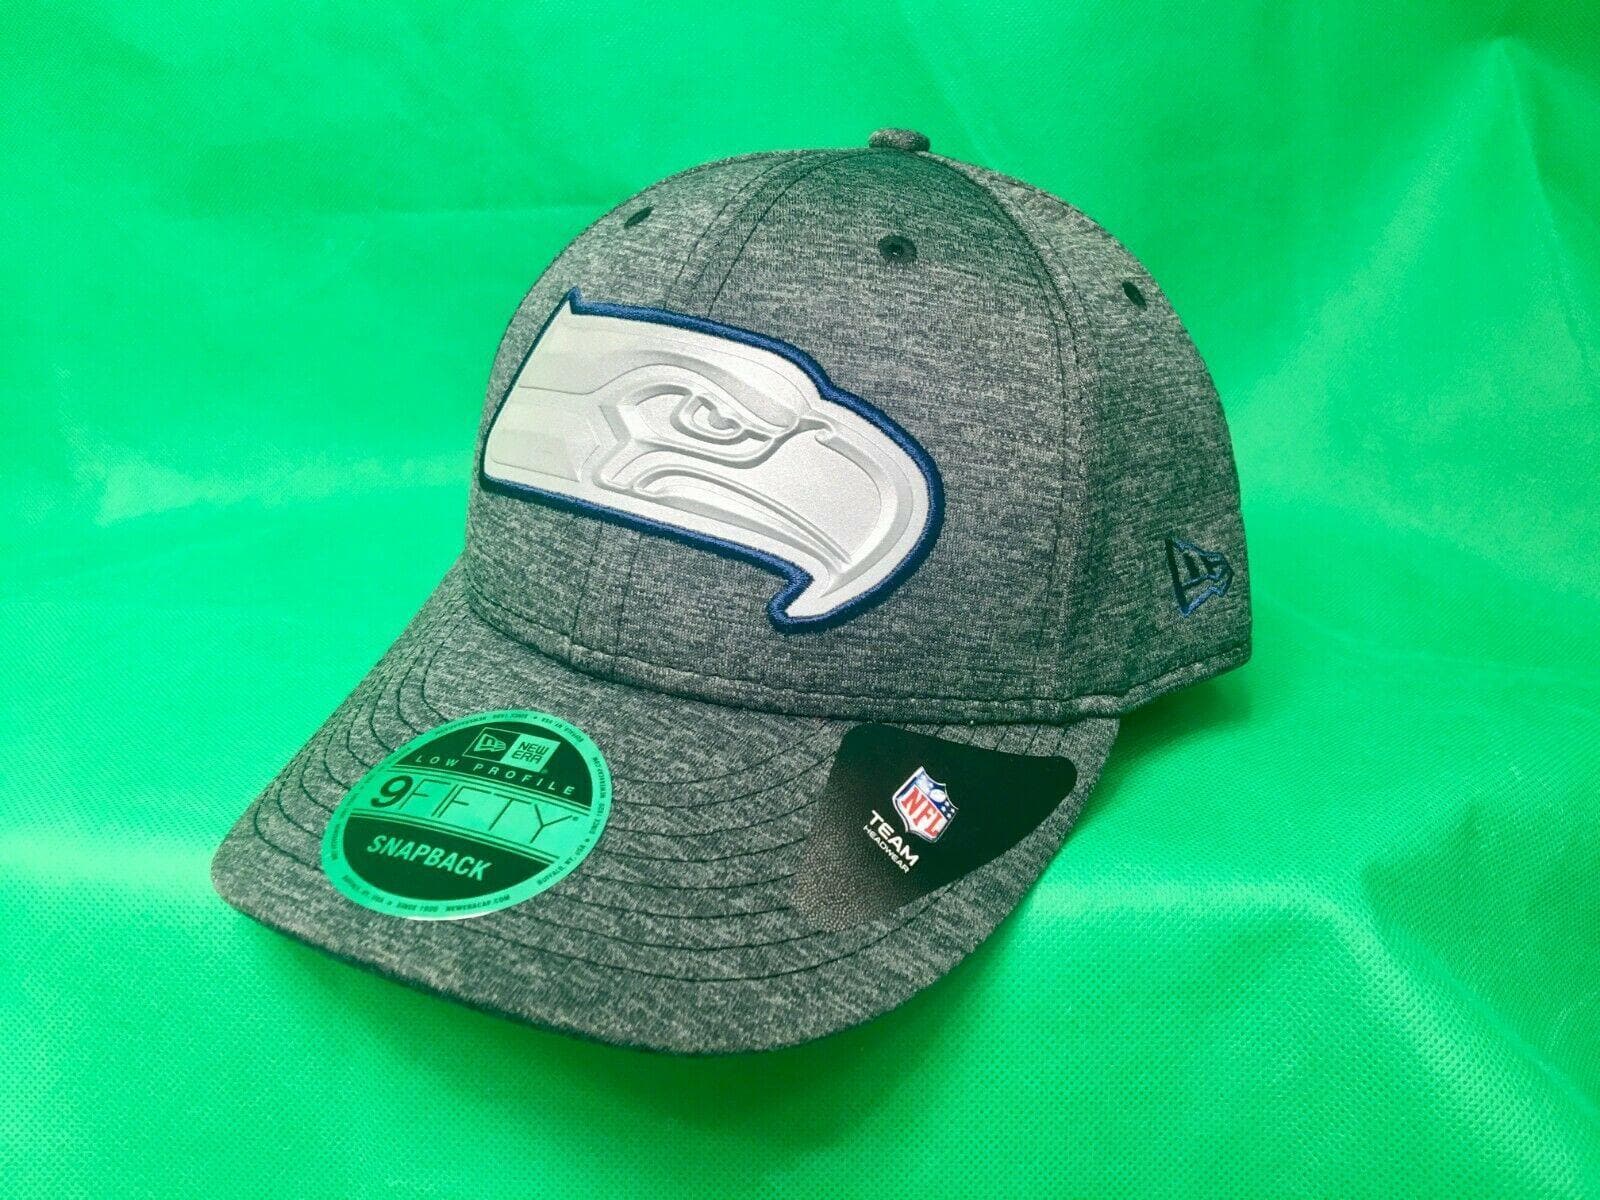 NFL Seattle Seahawks New Era 9FIFTY Adjustable Baseball Hat/Cap OSFM NWT